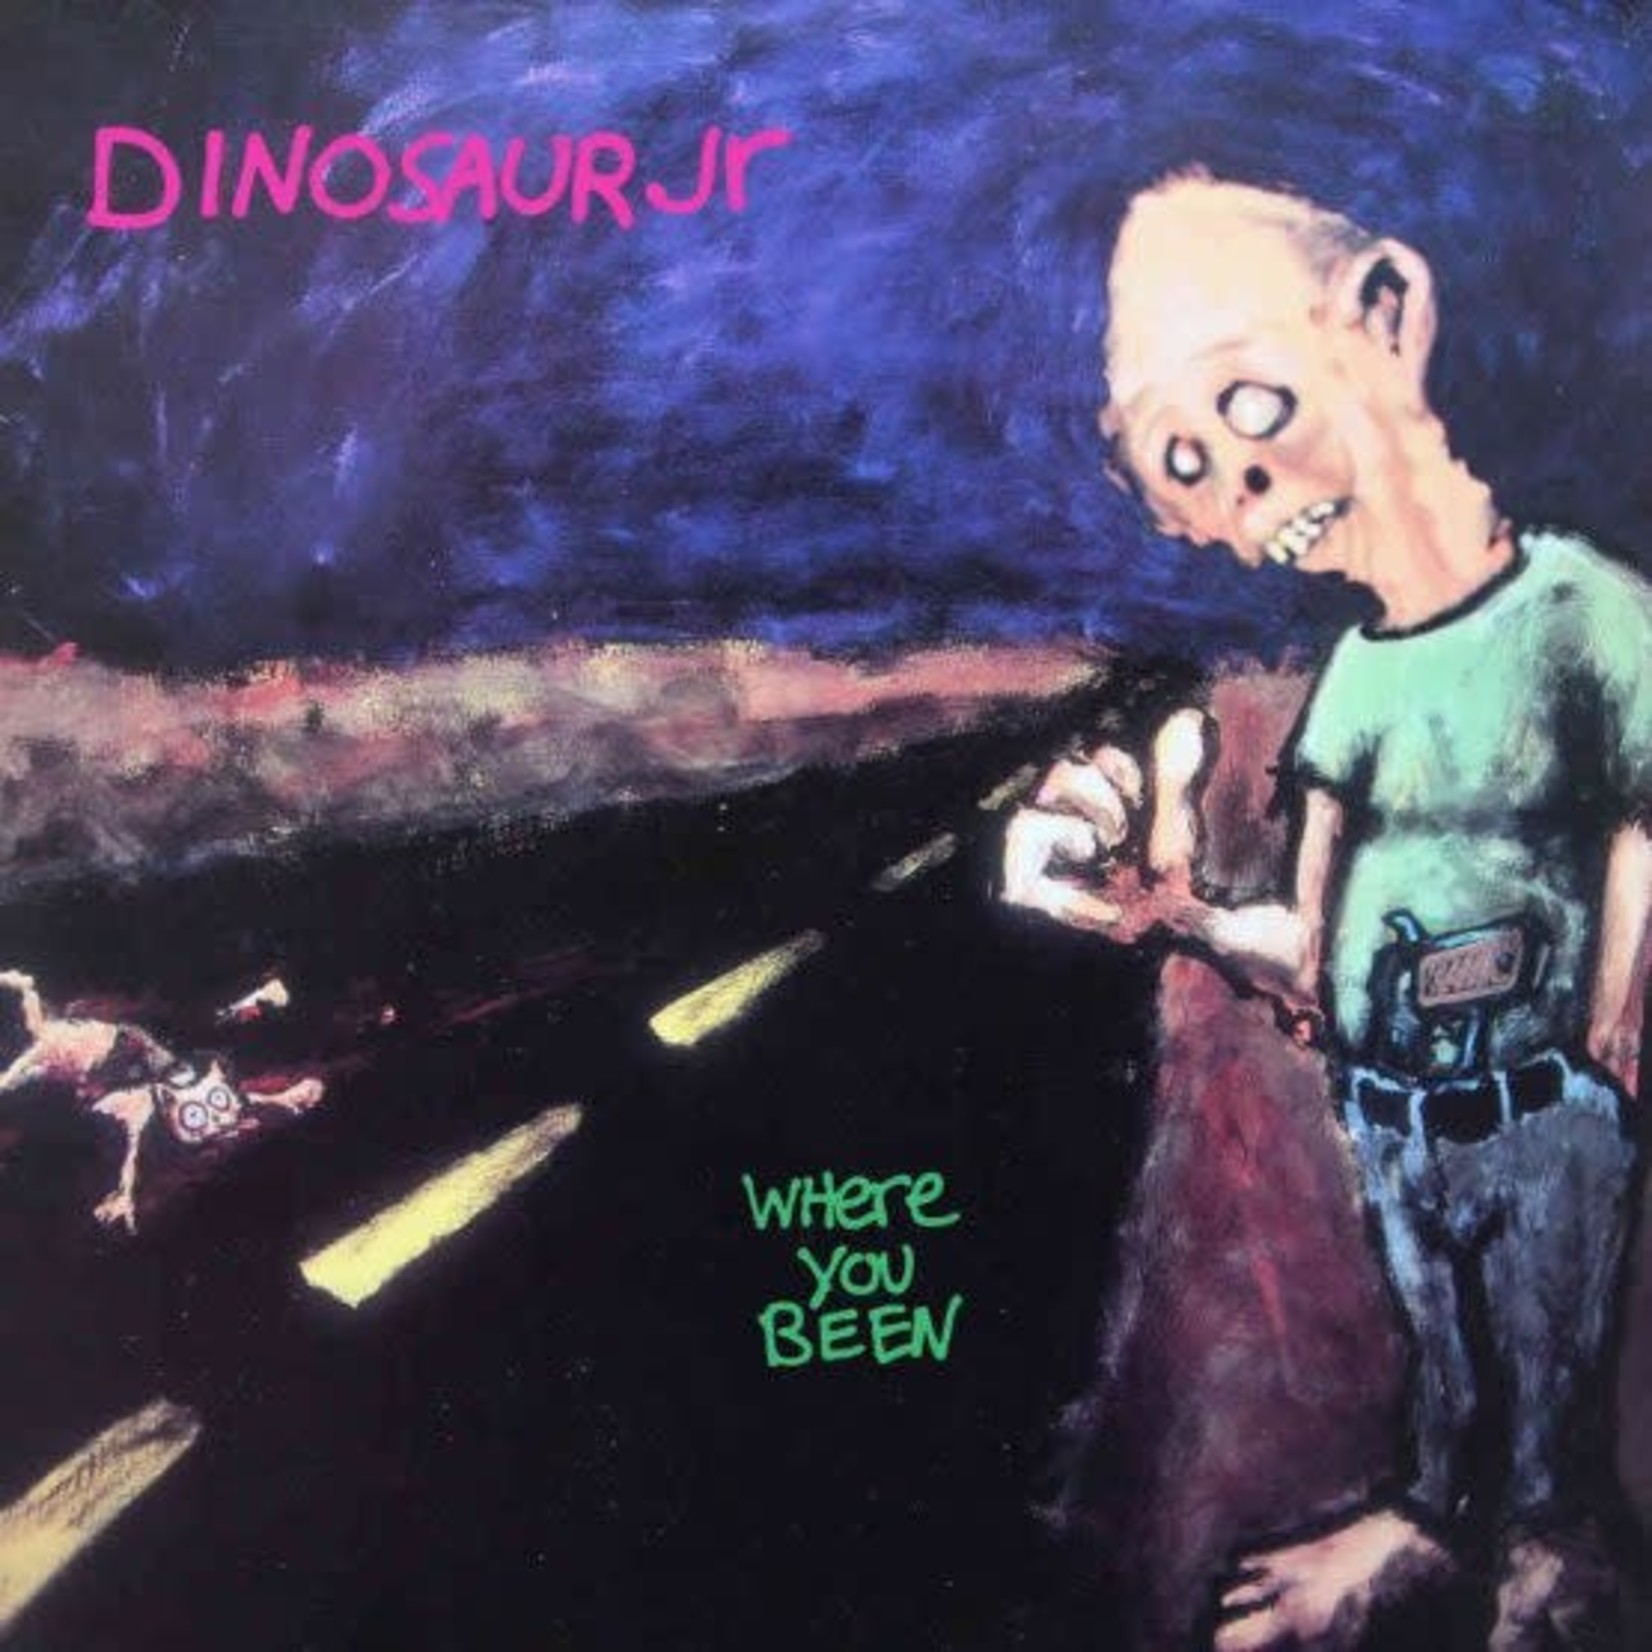 [New] Dinosaur Jr. - Where You Been (2LP, blue vinyl)